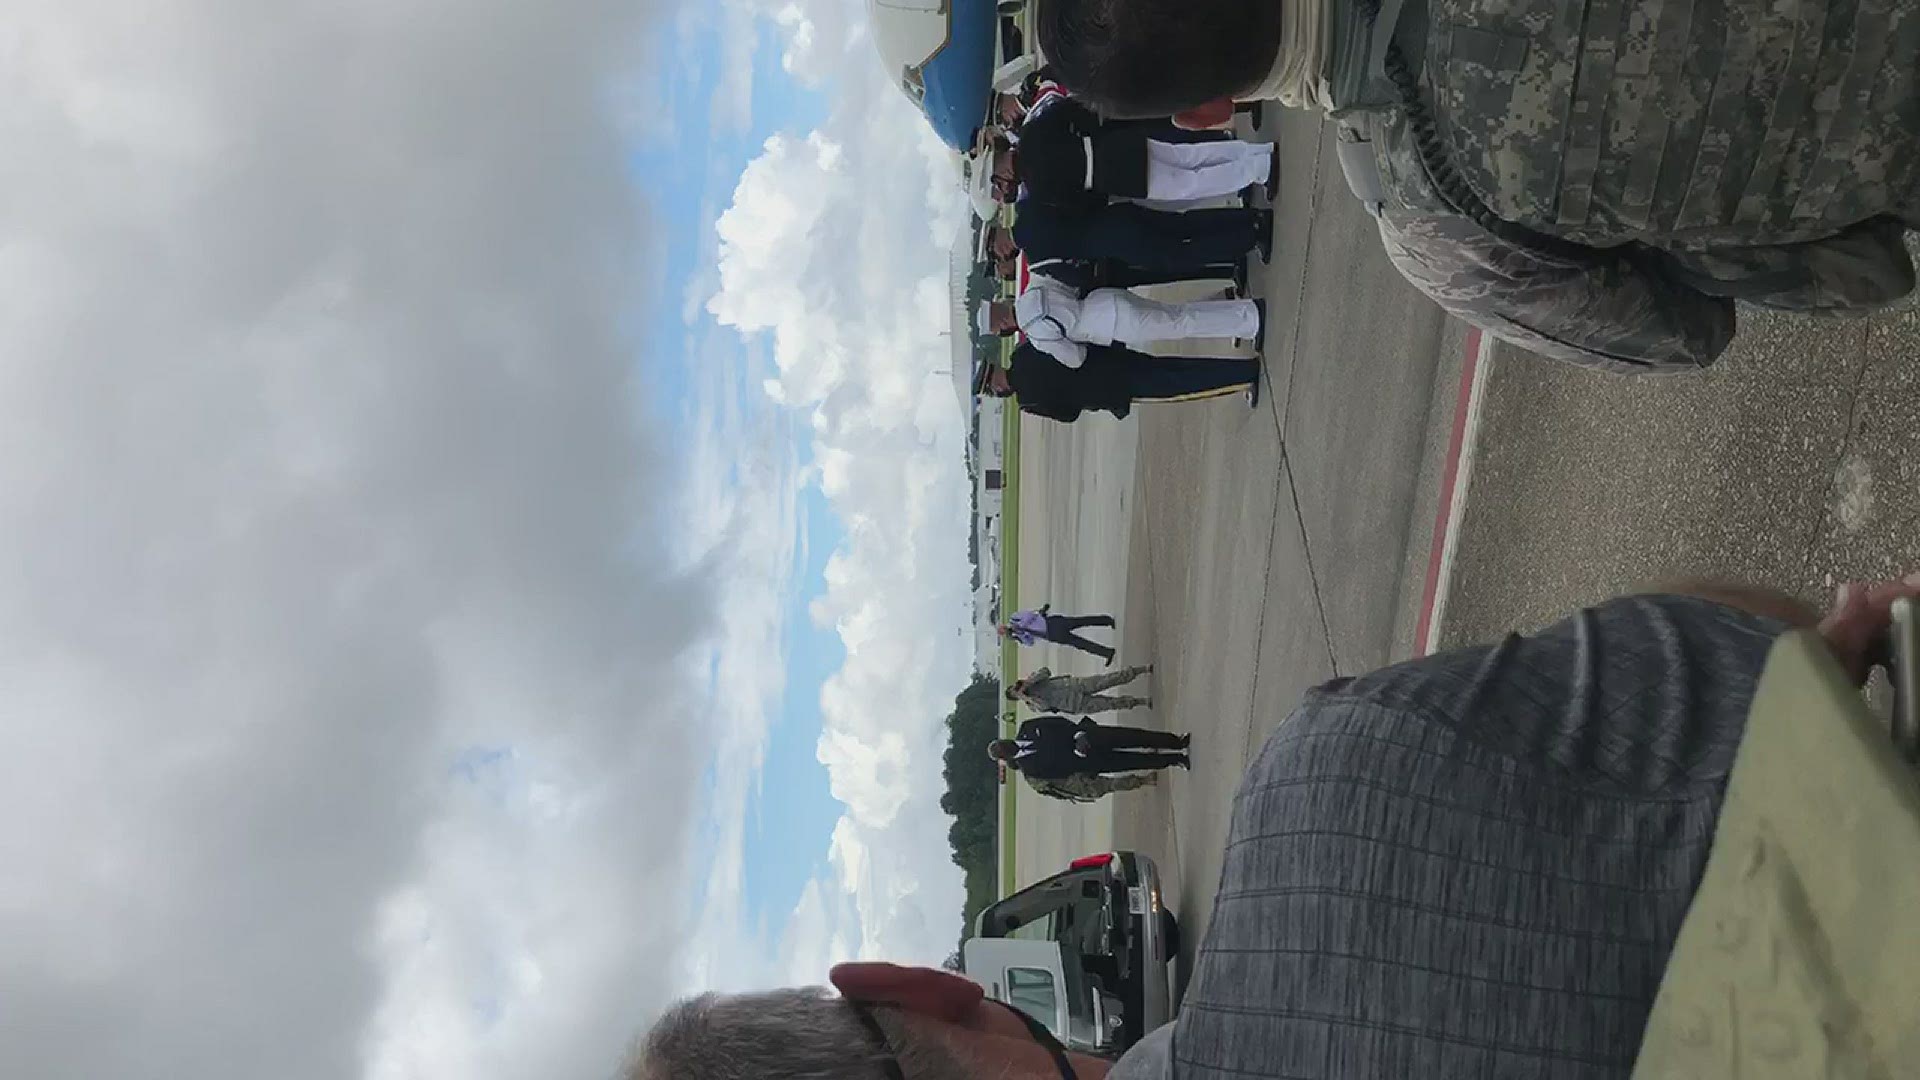 Congressman John Lewis arriving at Dobbins Air Reserve Base
Credit: Thomas Ransby